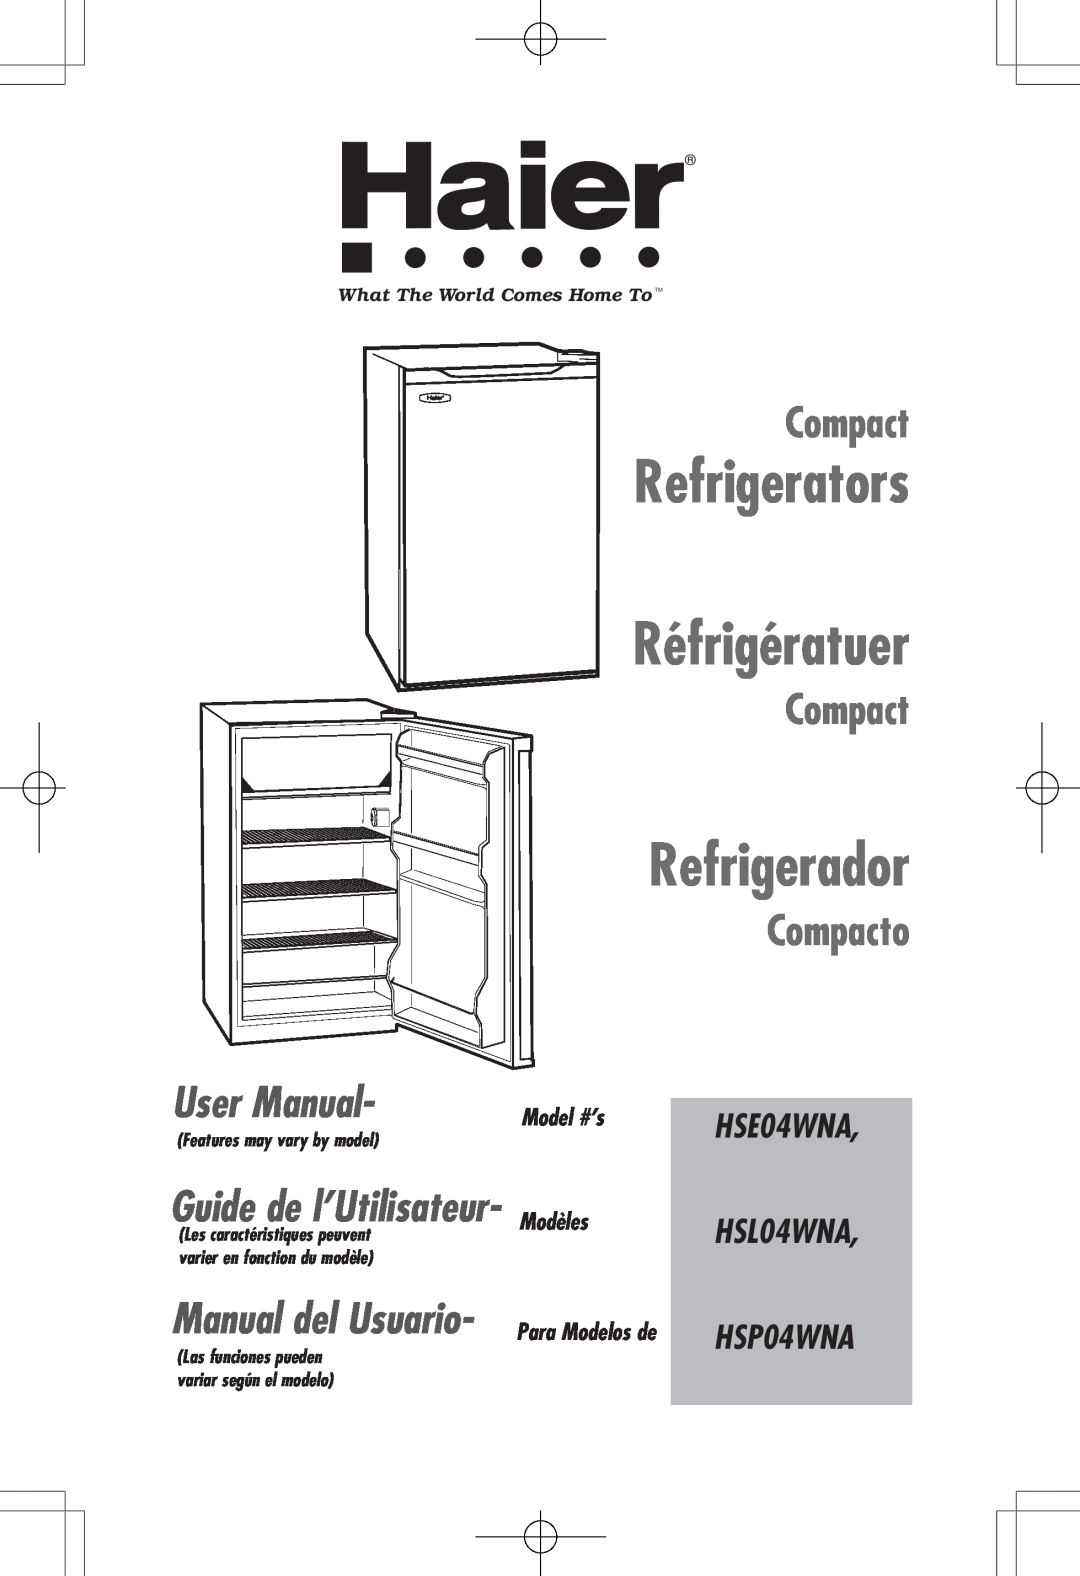 Haier HSP04WNA user manual Model #’s, Modèles, Refrigerators Réfrigératuer, Refrigerador, Compacto, Manual del Usuario 